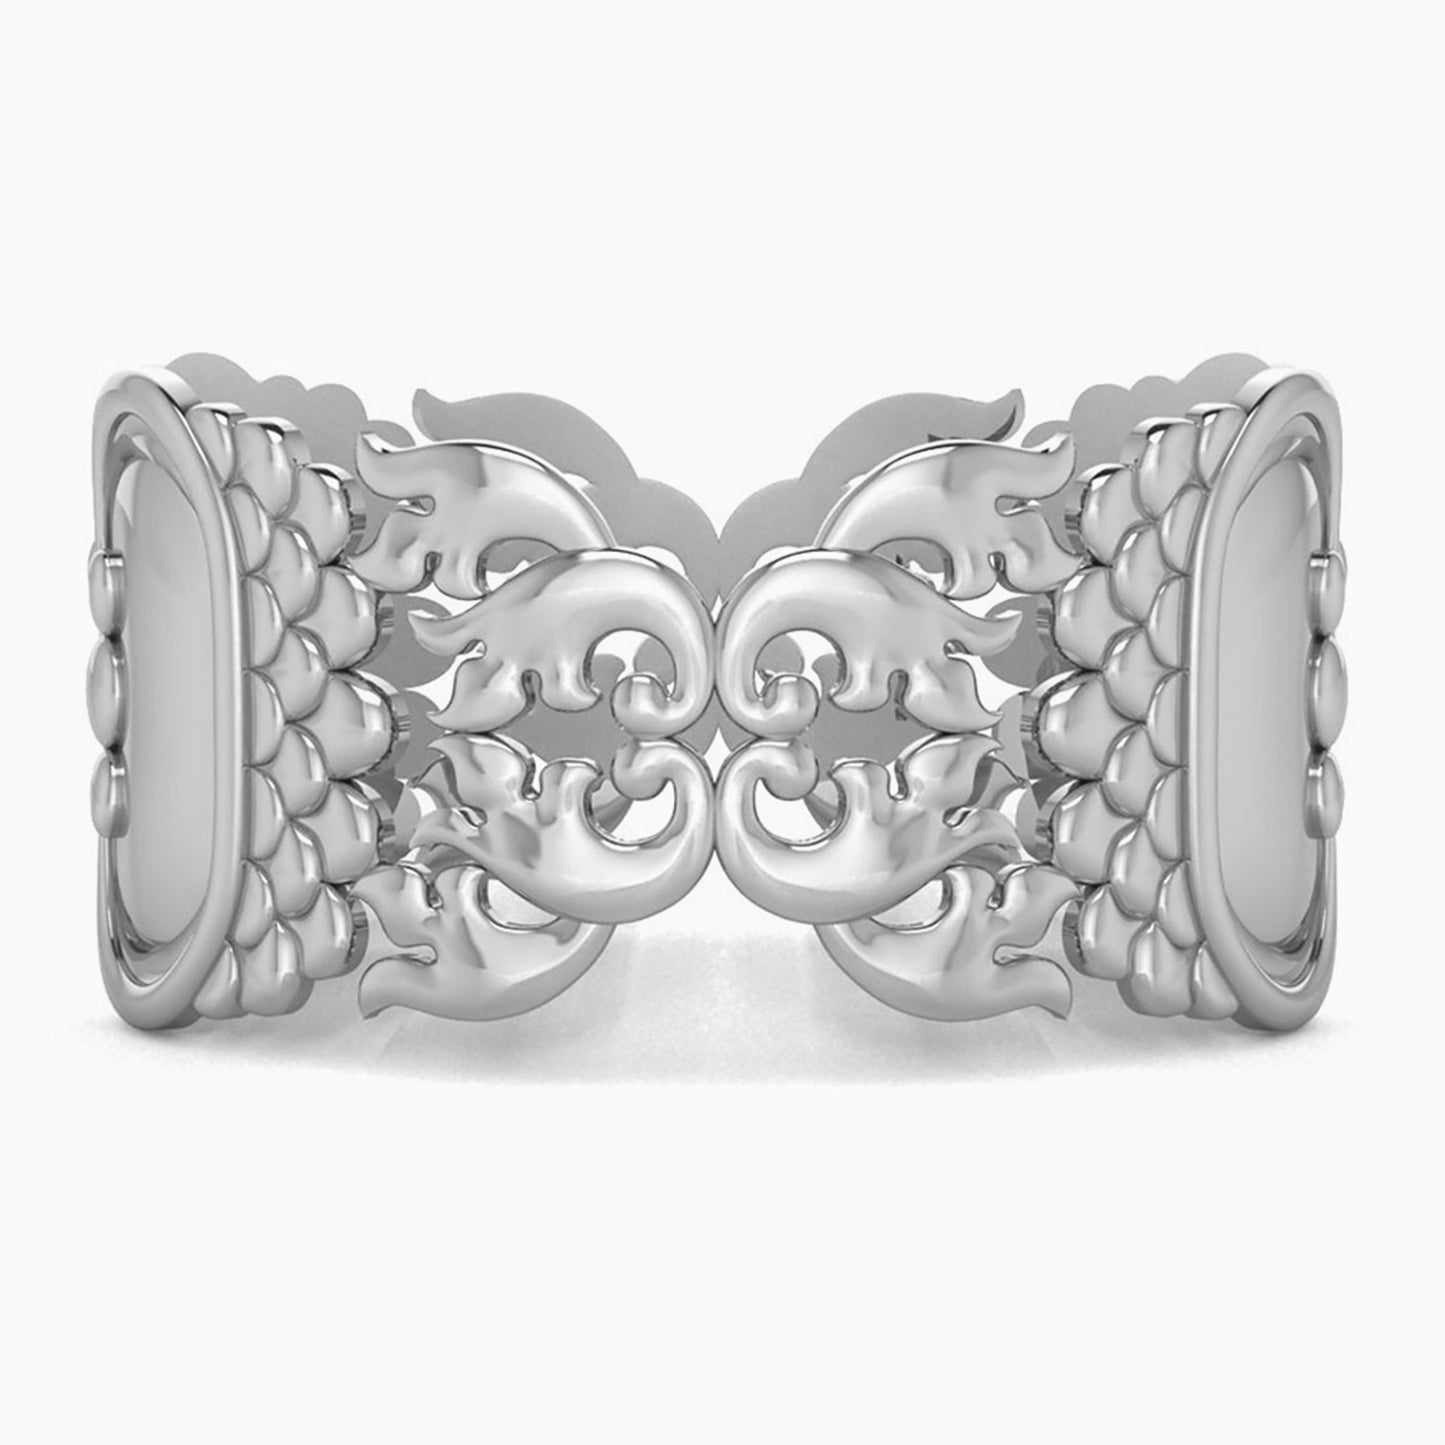 Imperial Silver-plate Napkin Rings by Krysaliis - Set of 4